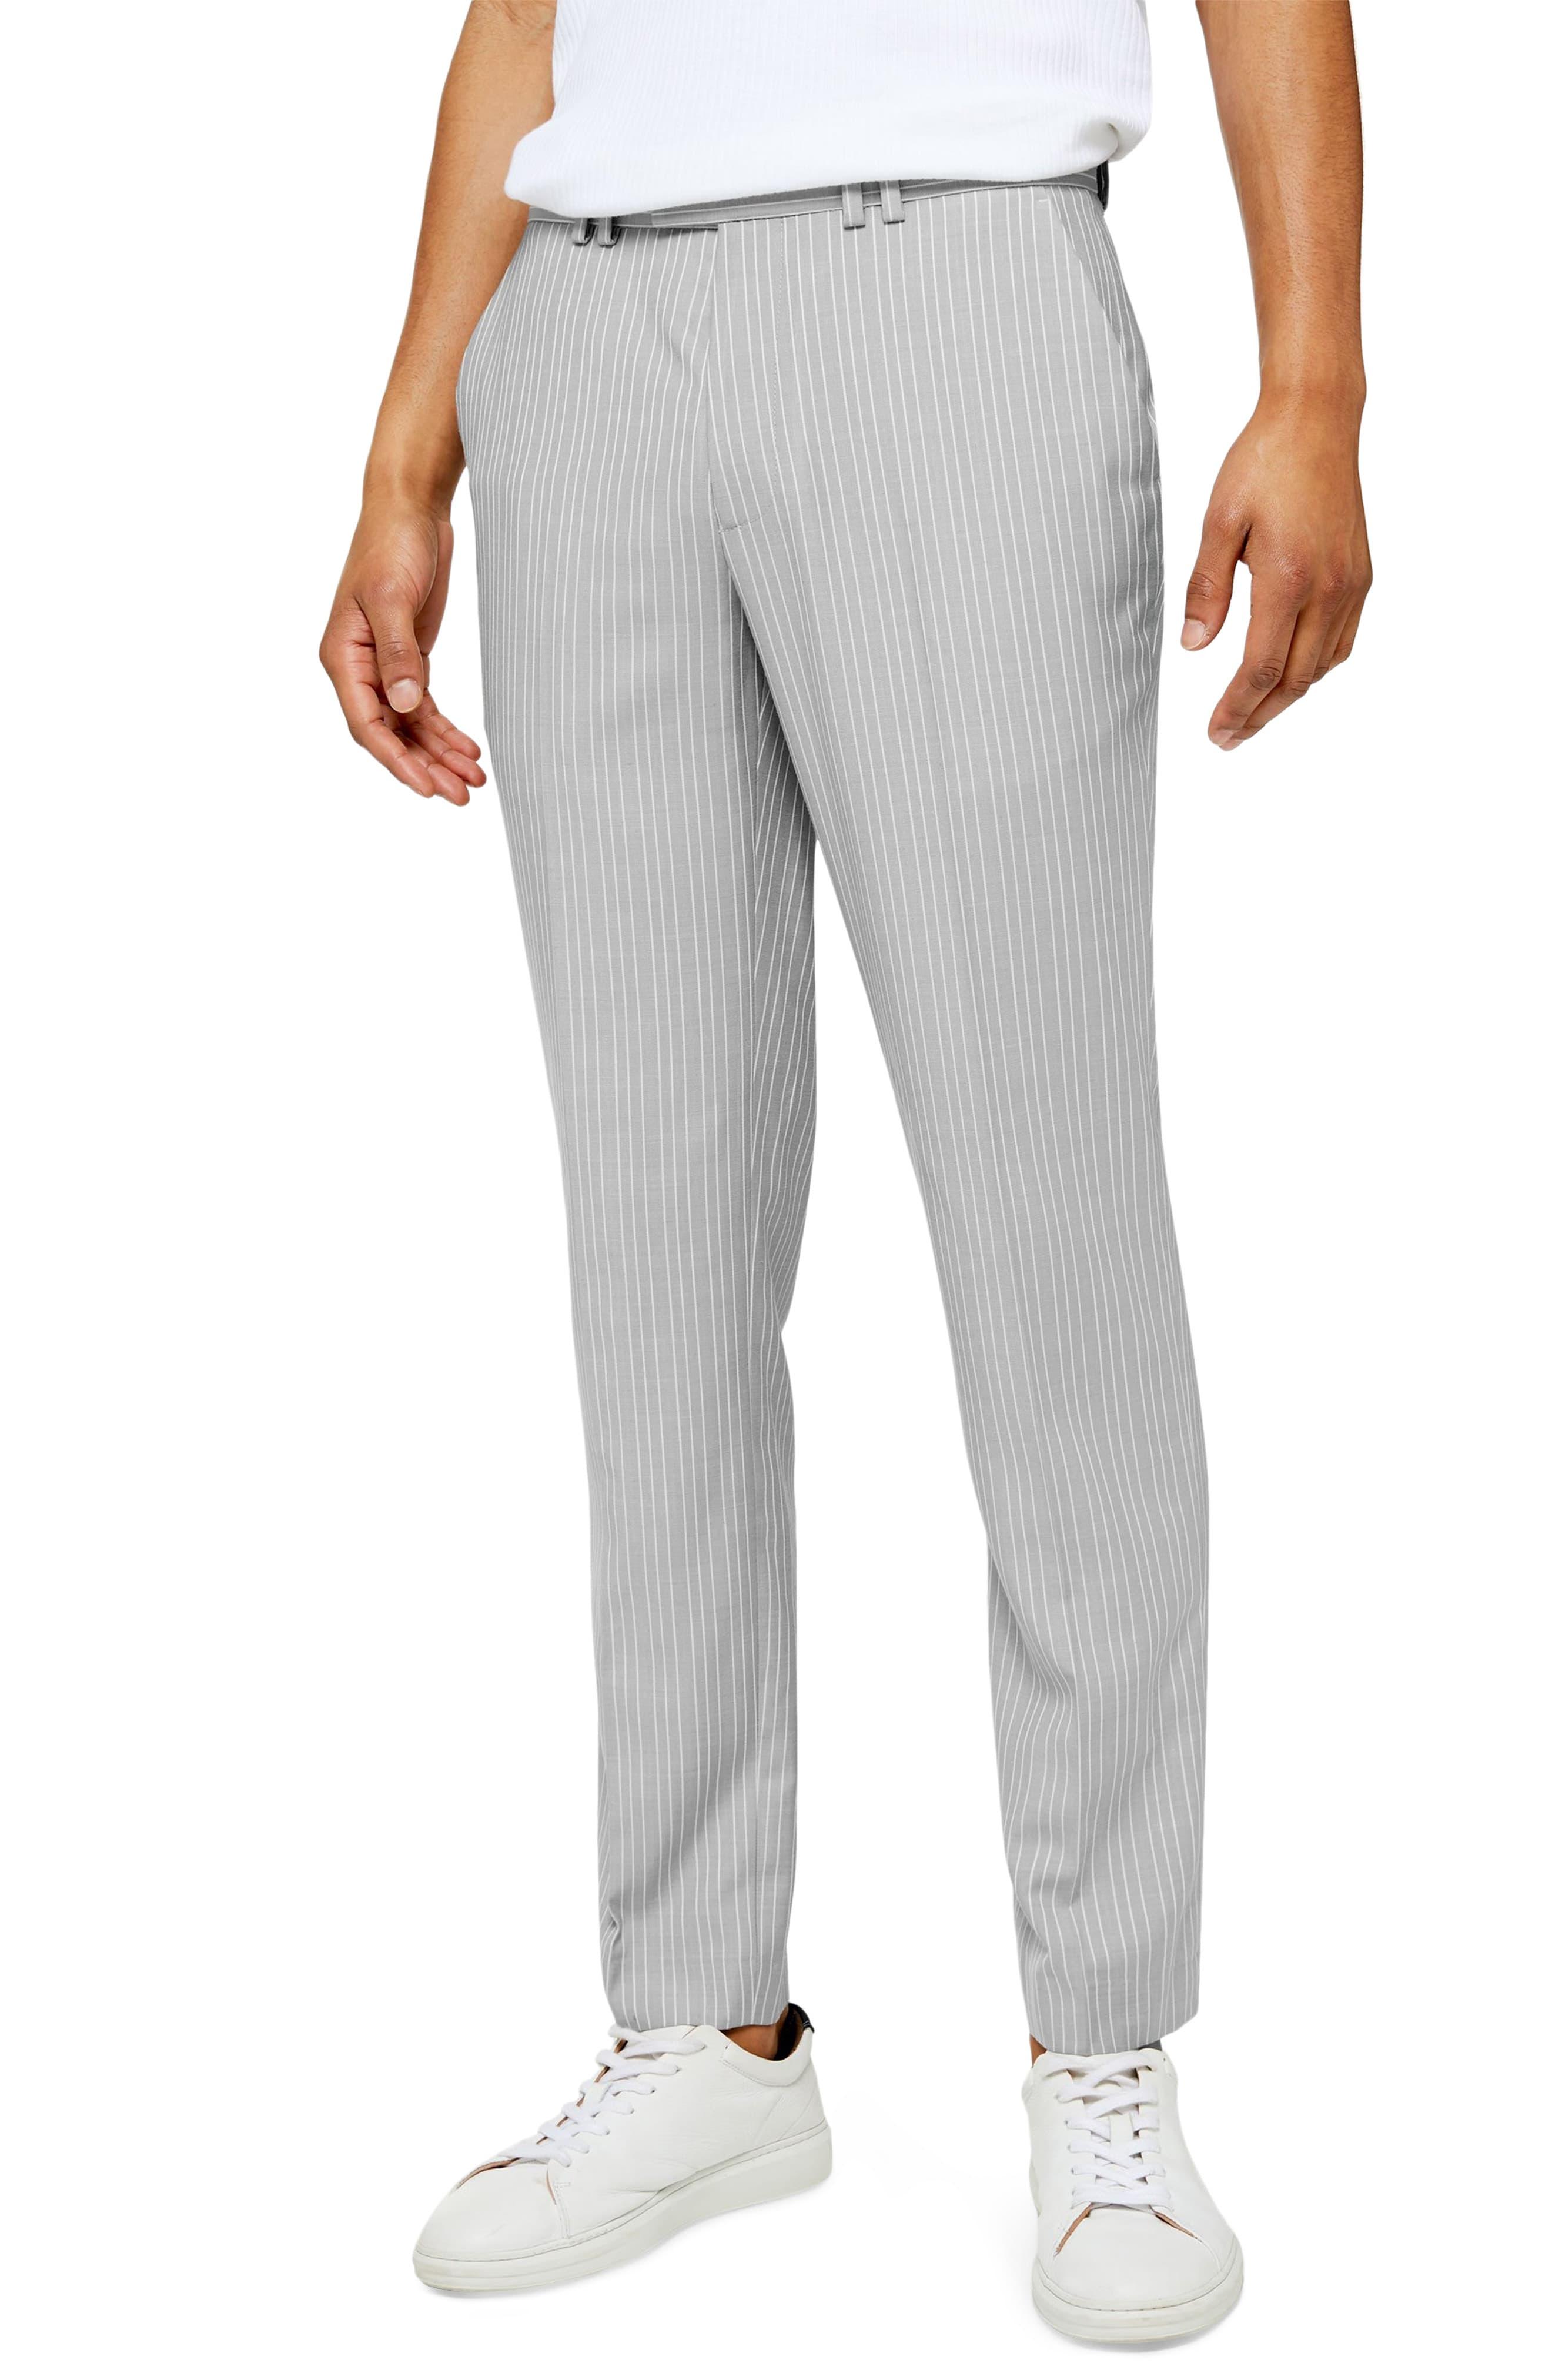 TOPMAN Paly Pinstripe Slim Fit Dress Pants in Gray for Men - Lyst